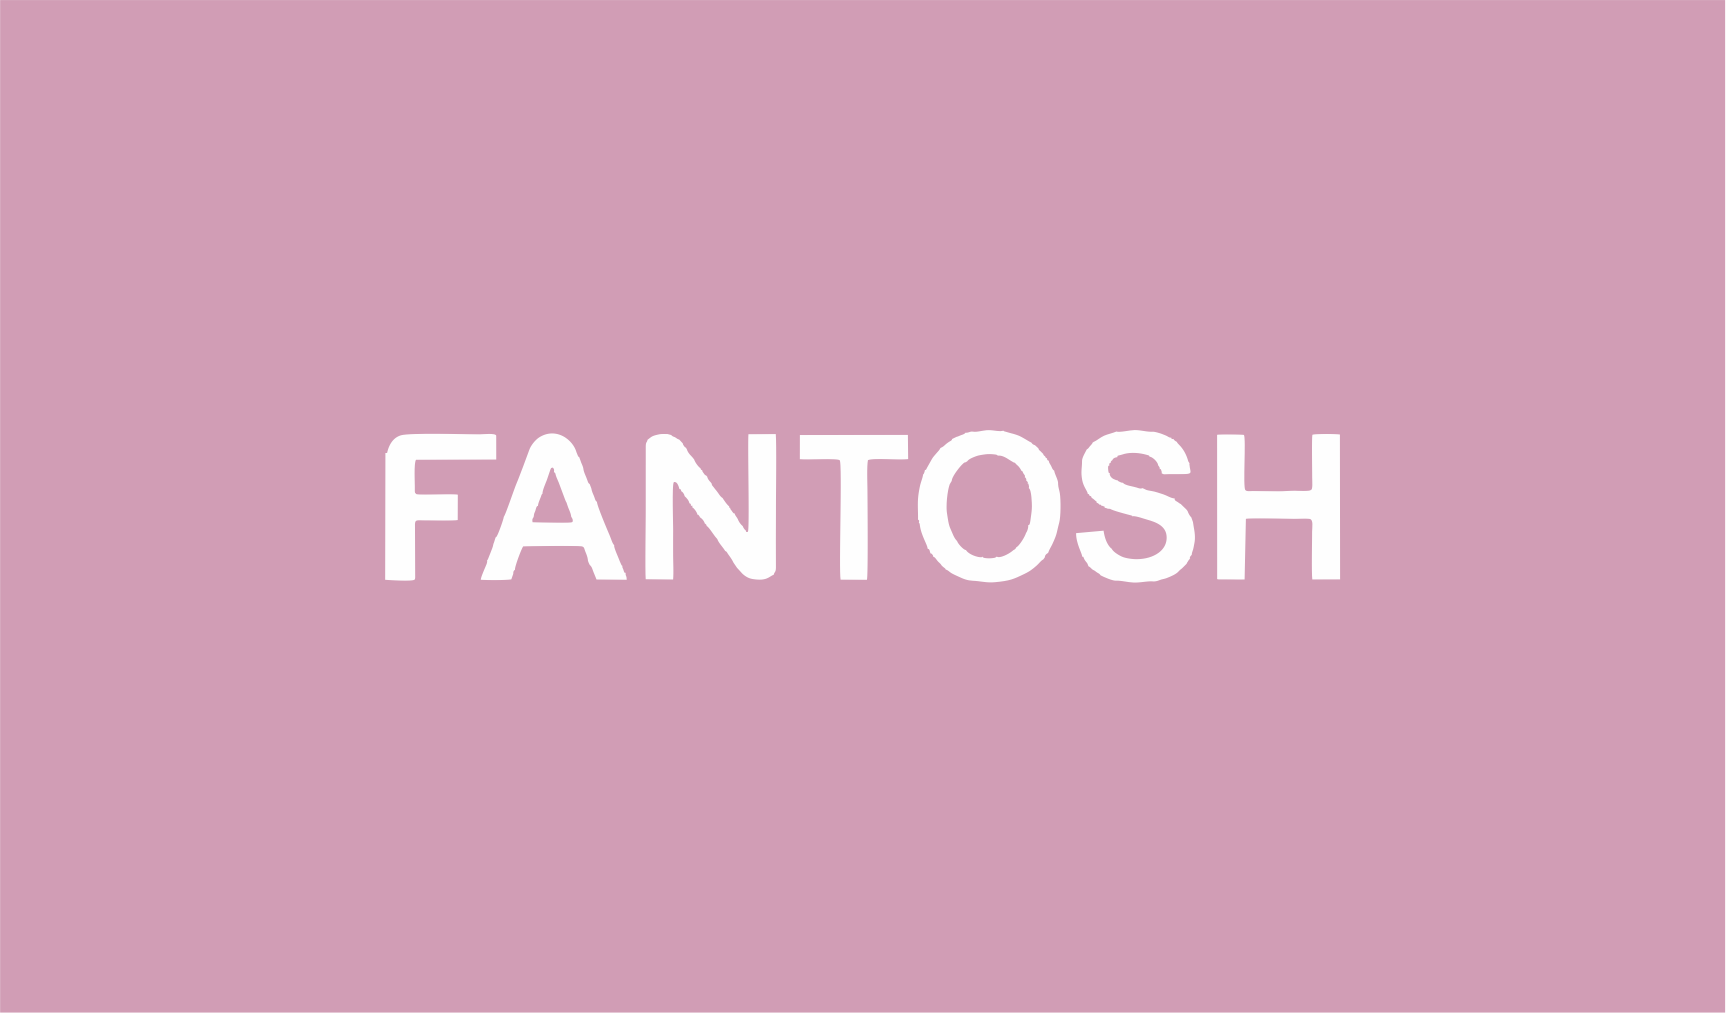 FANTOSH